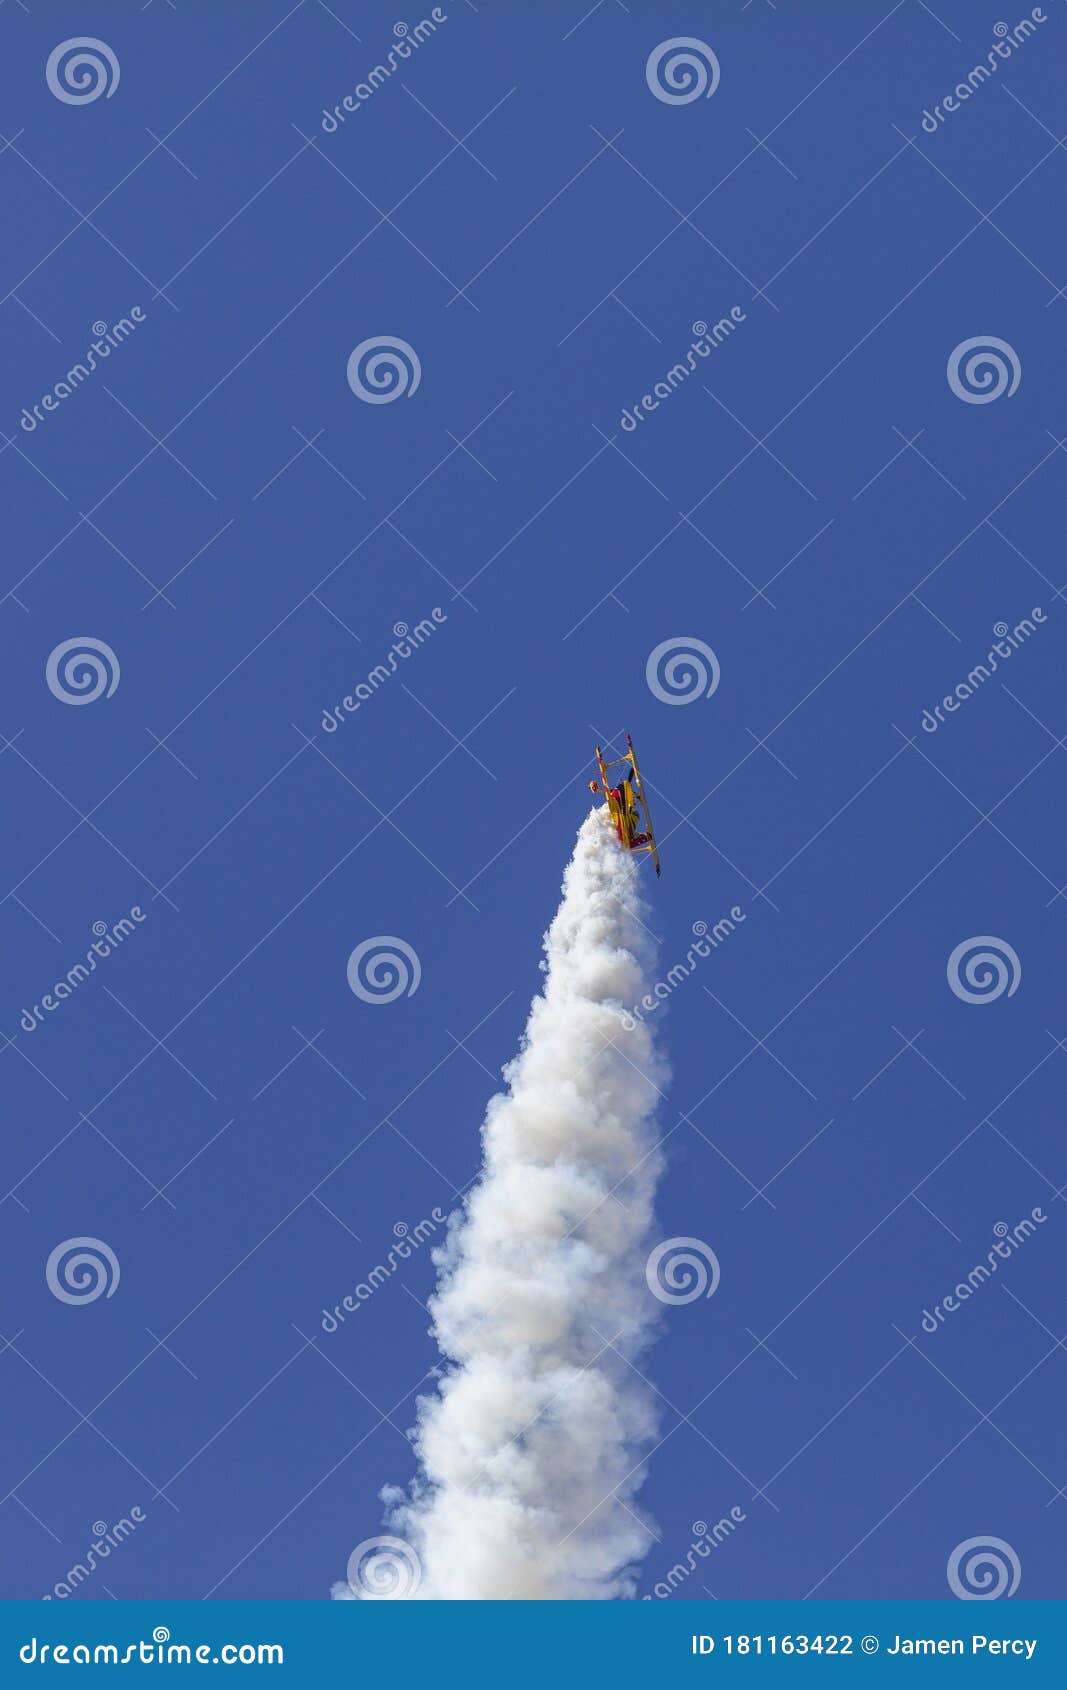 skyaces plane performing aerobatics with a smoke trail